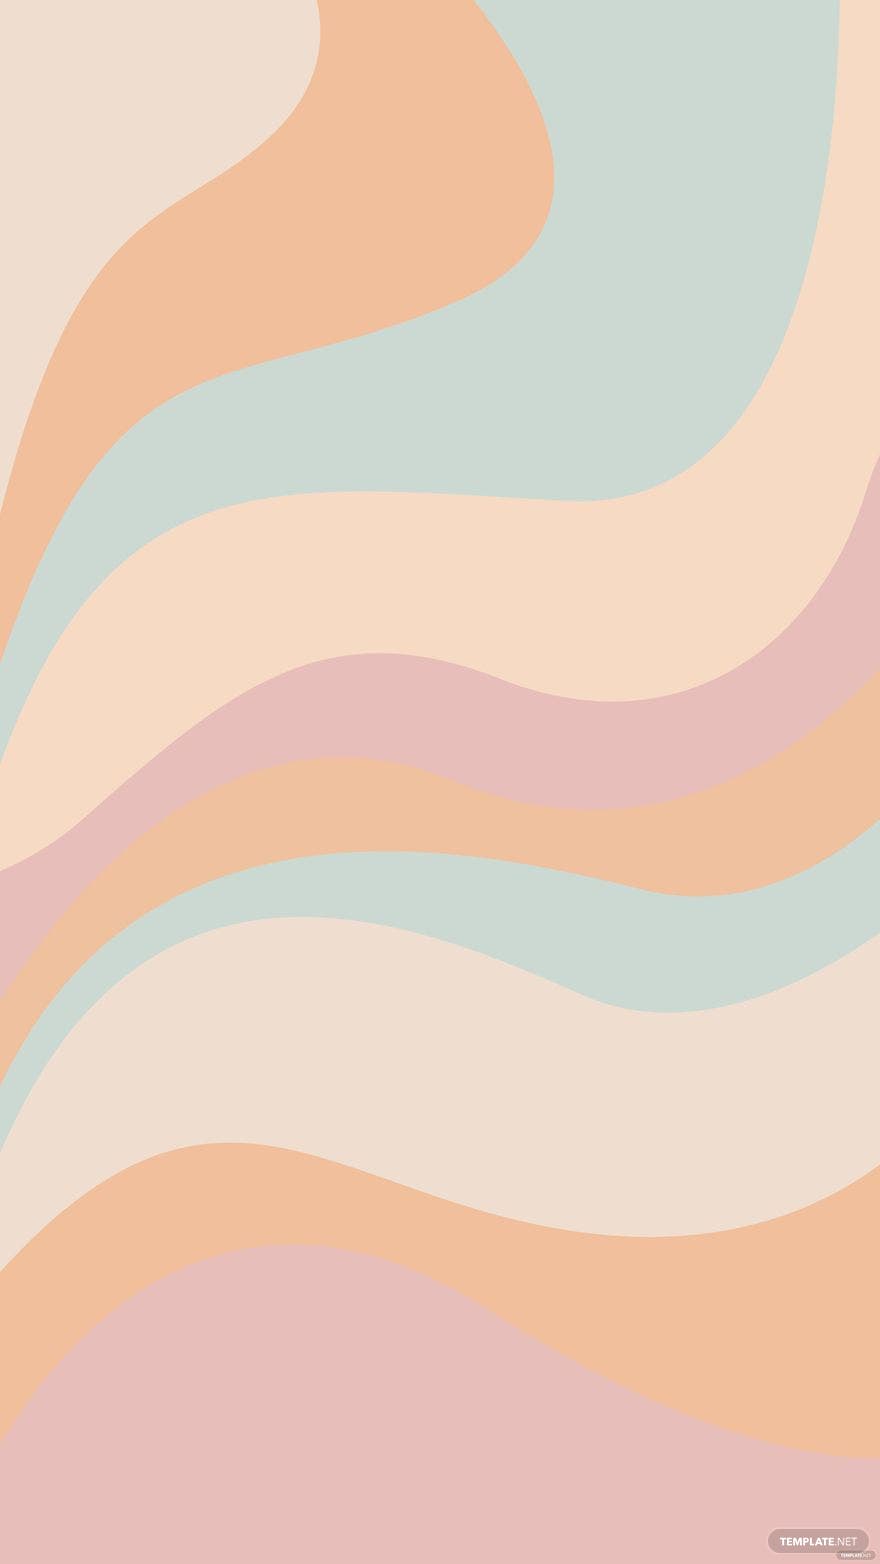 Free Pastel Aesthetic iPhone Background, Illustrator, JPG, SVG